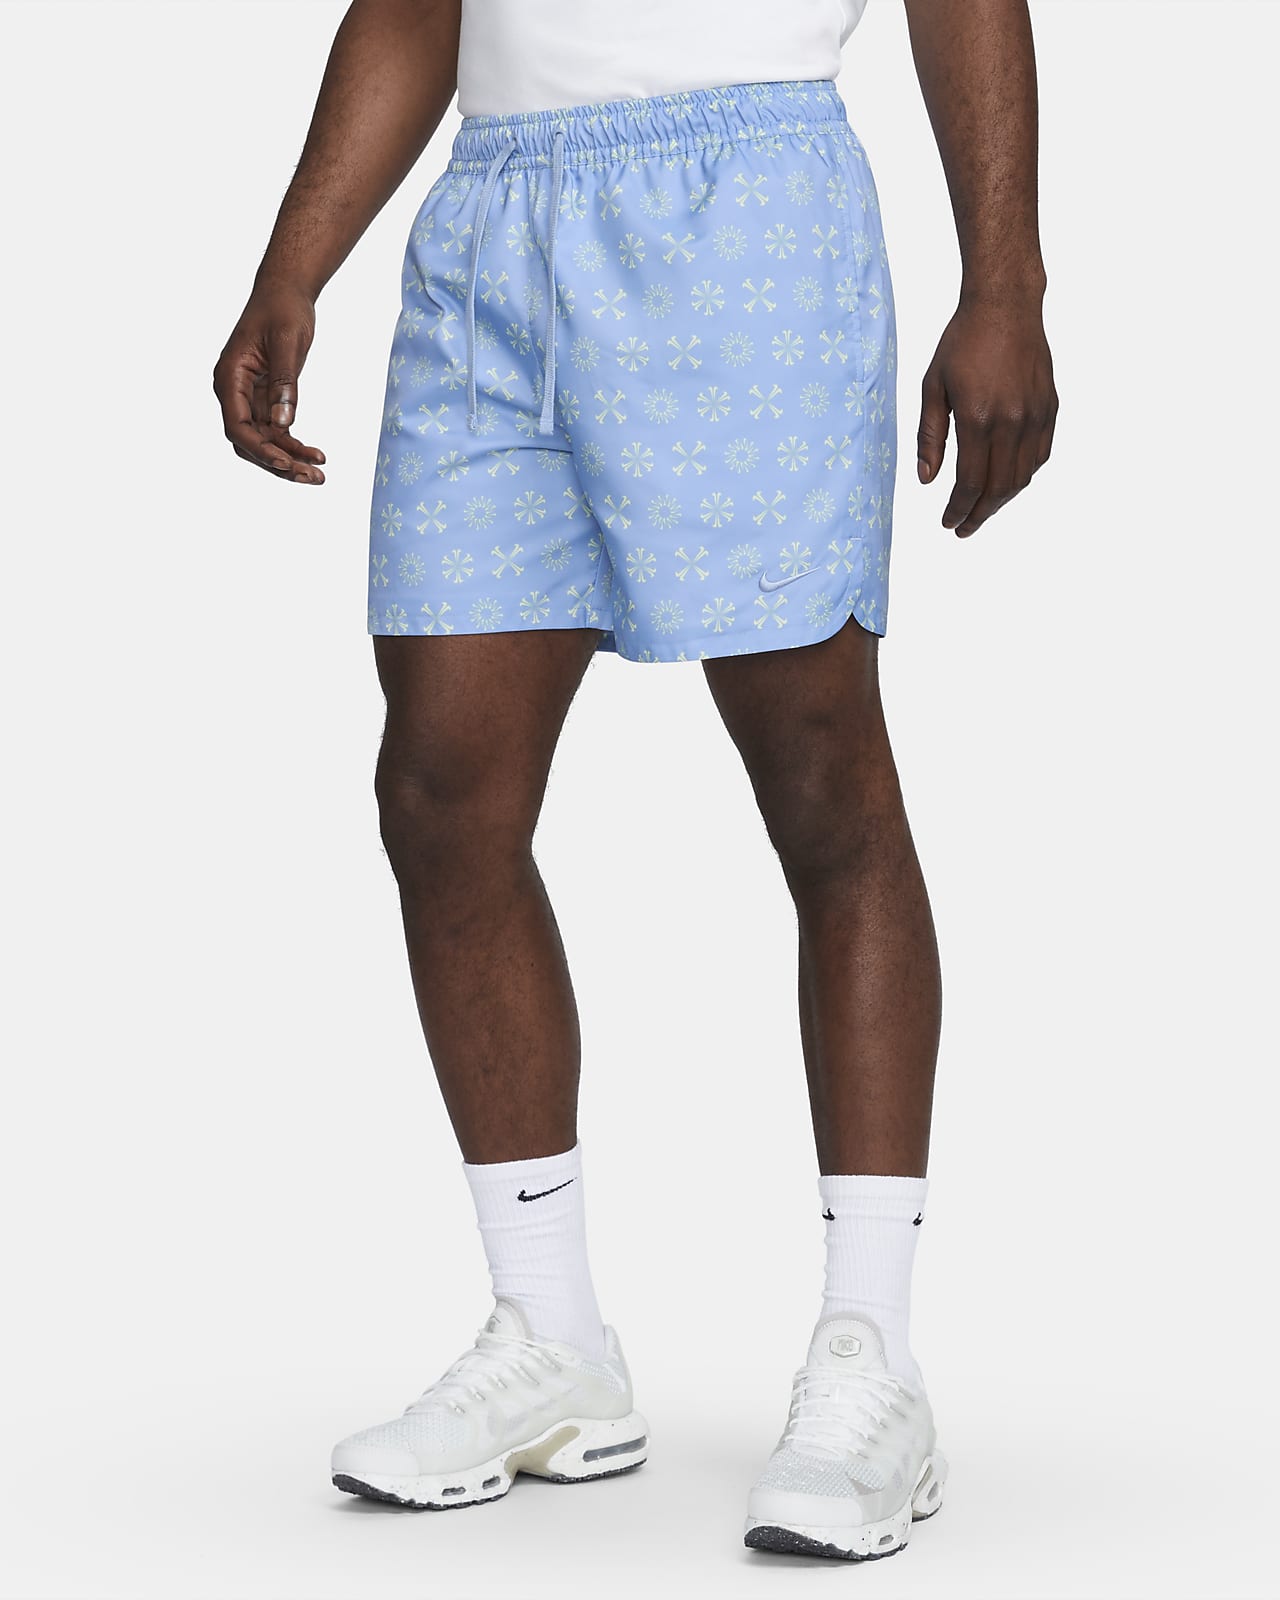 Men's Activewear by   Mens activewear, Basketball shorts